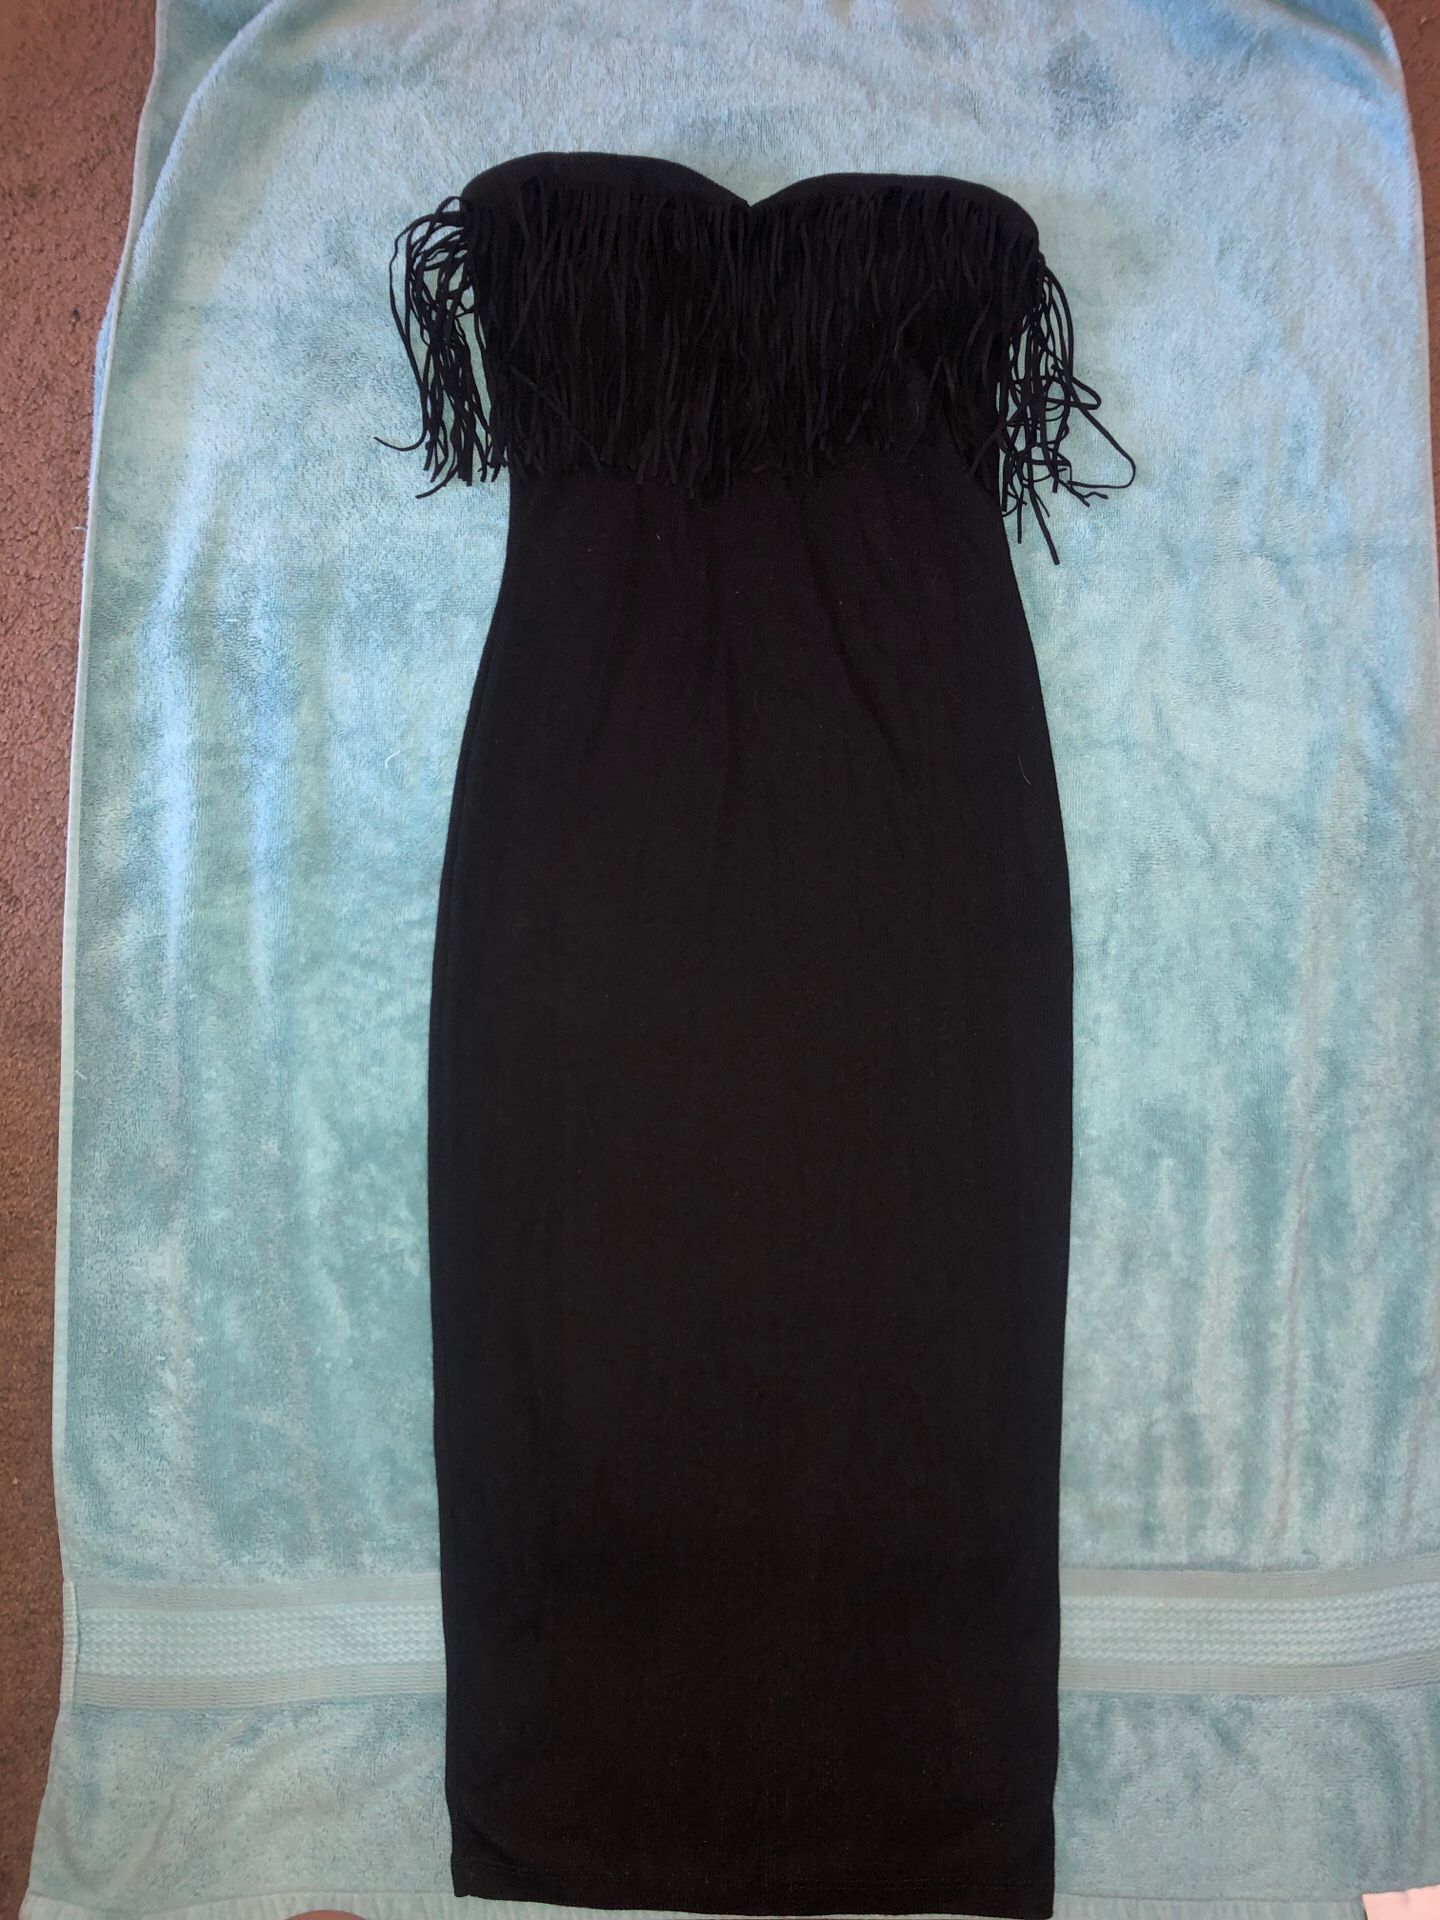 Guess bodycon black dress (knee length)